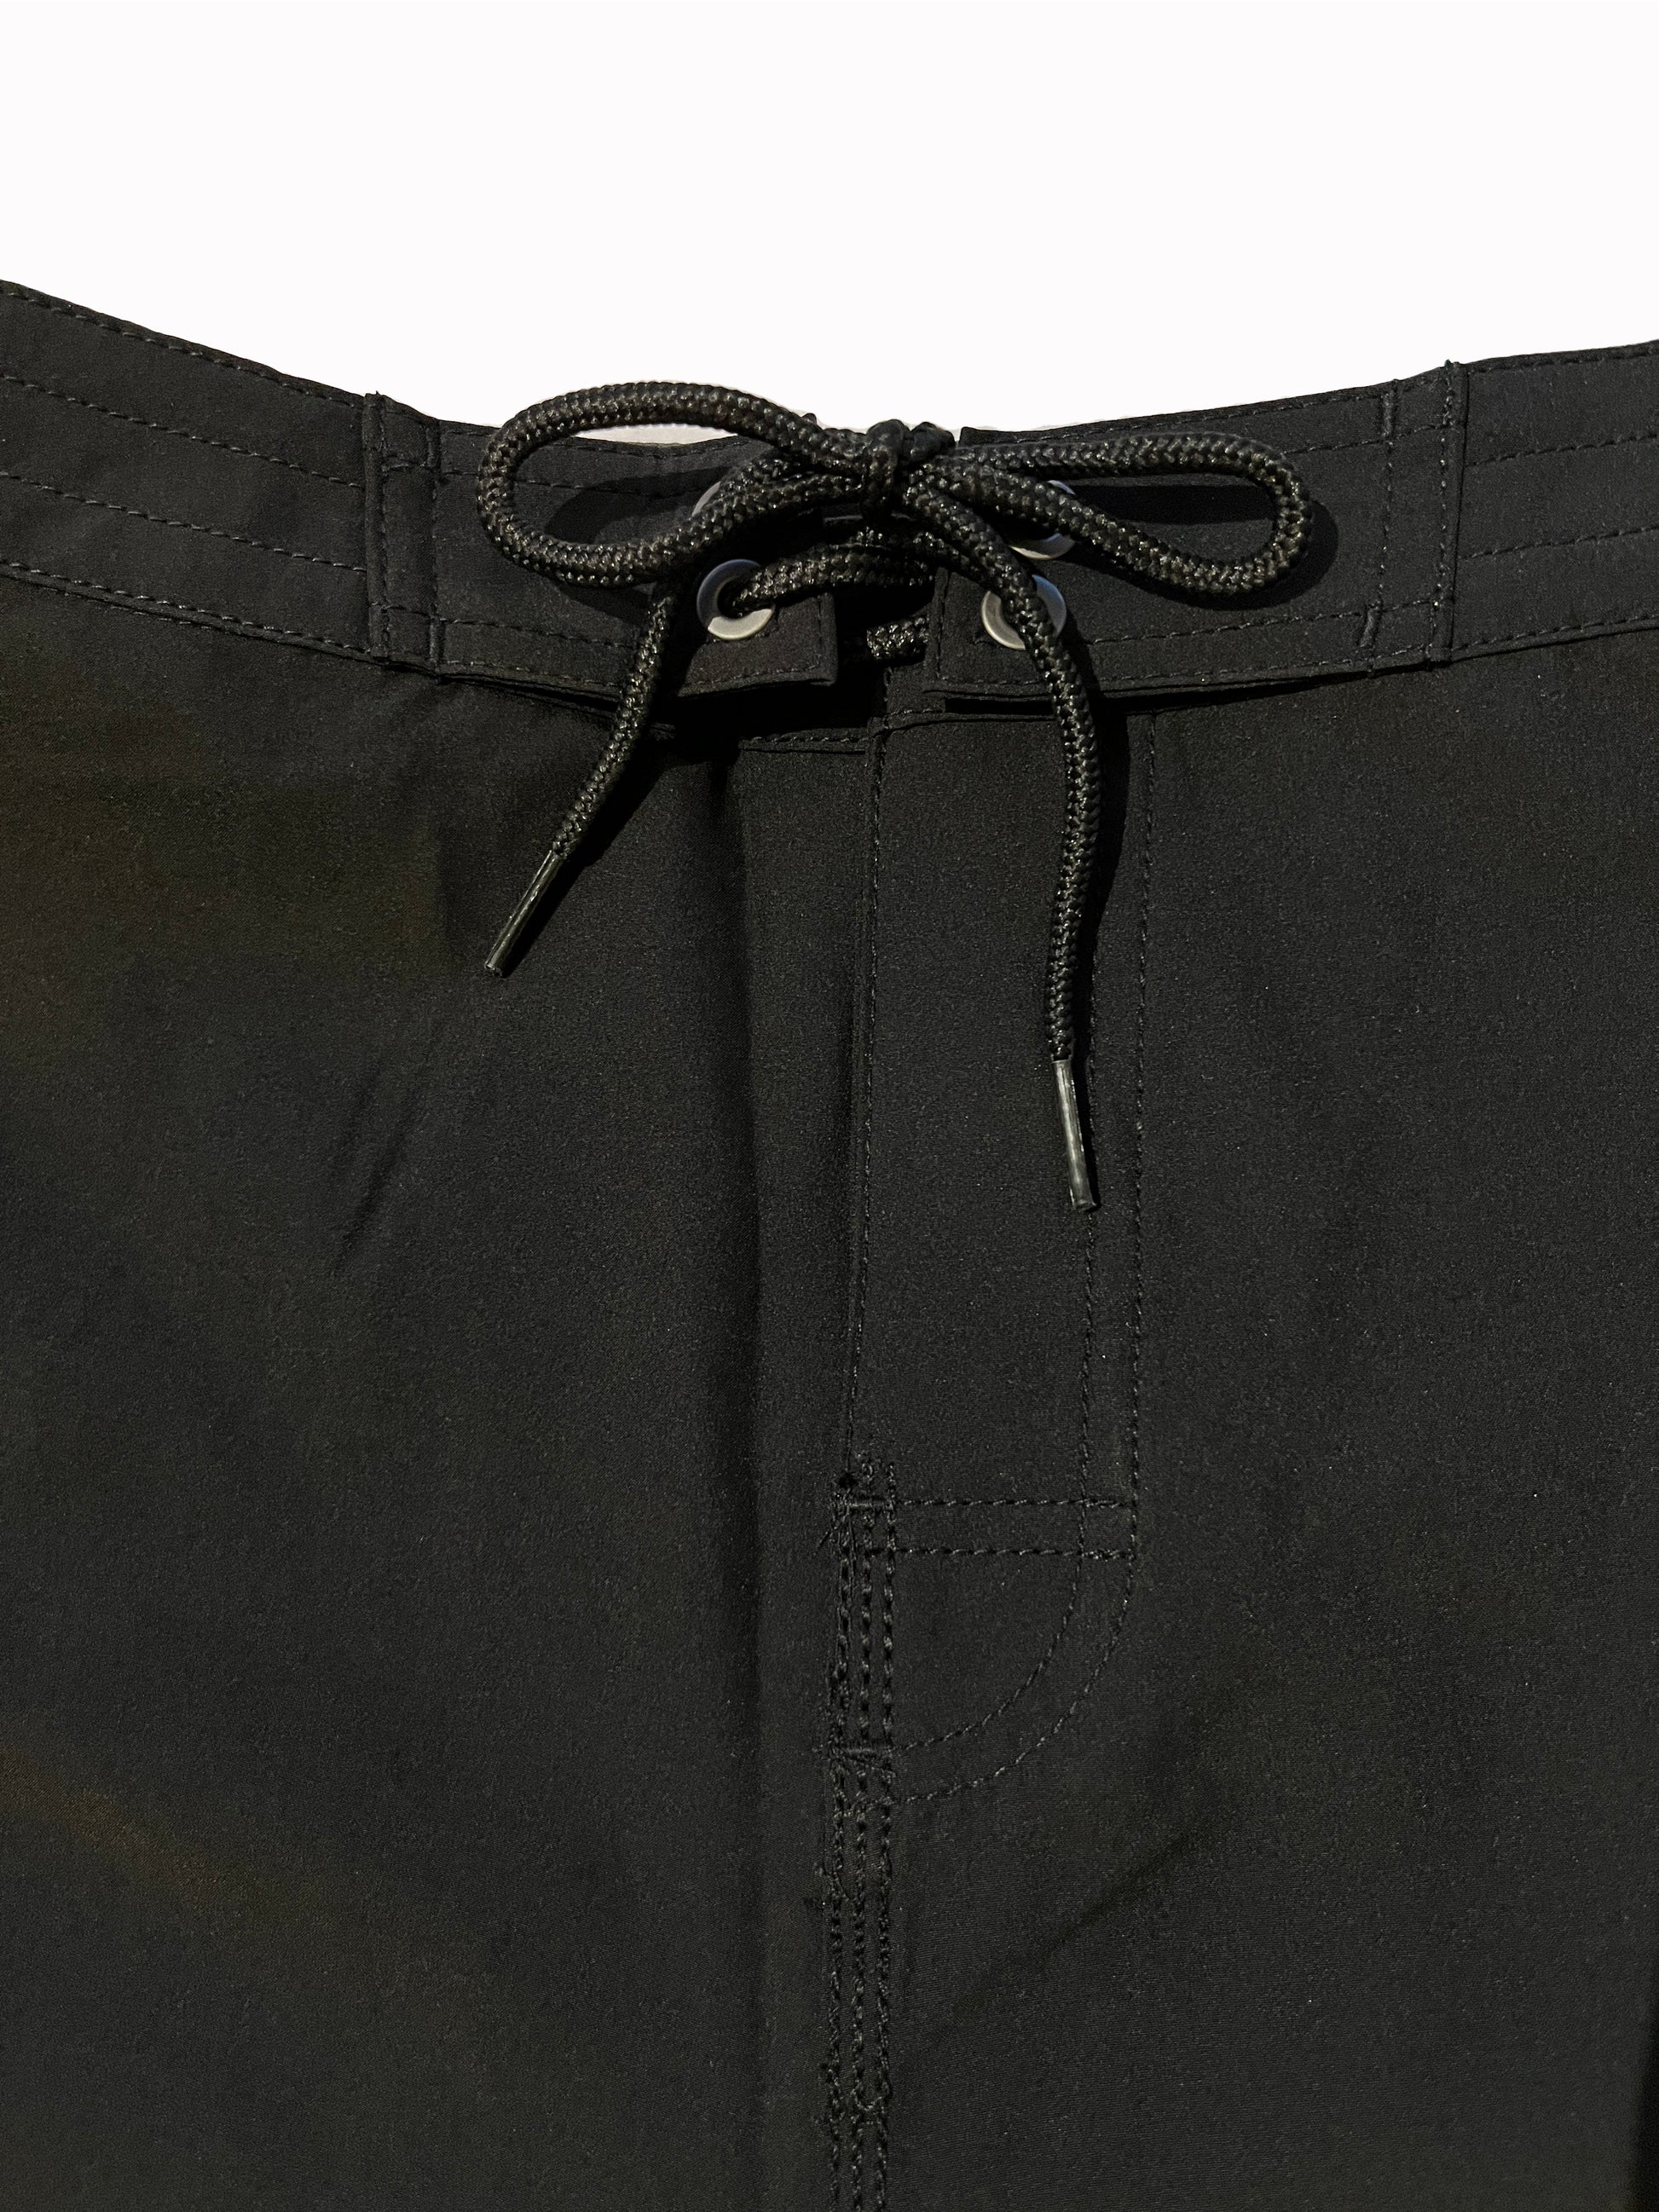 closeup detail of waistband drawstring